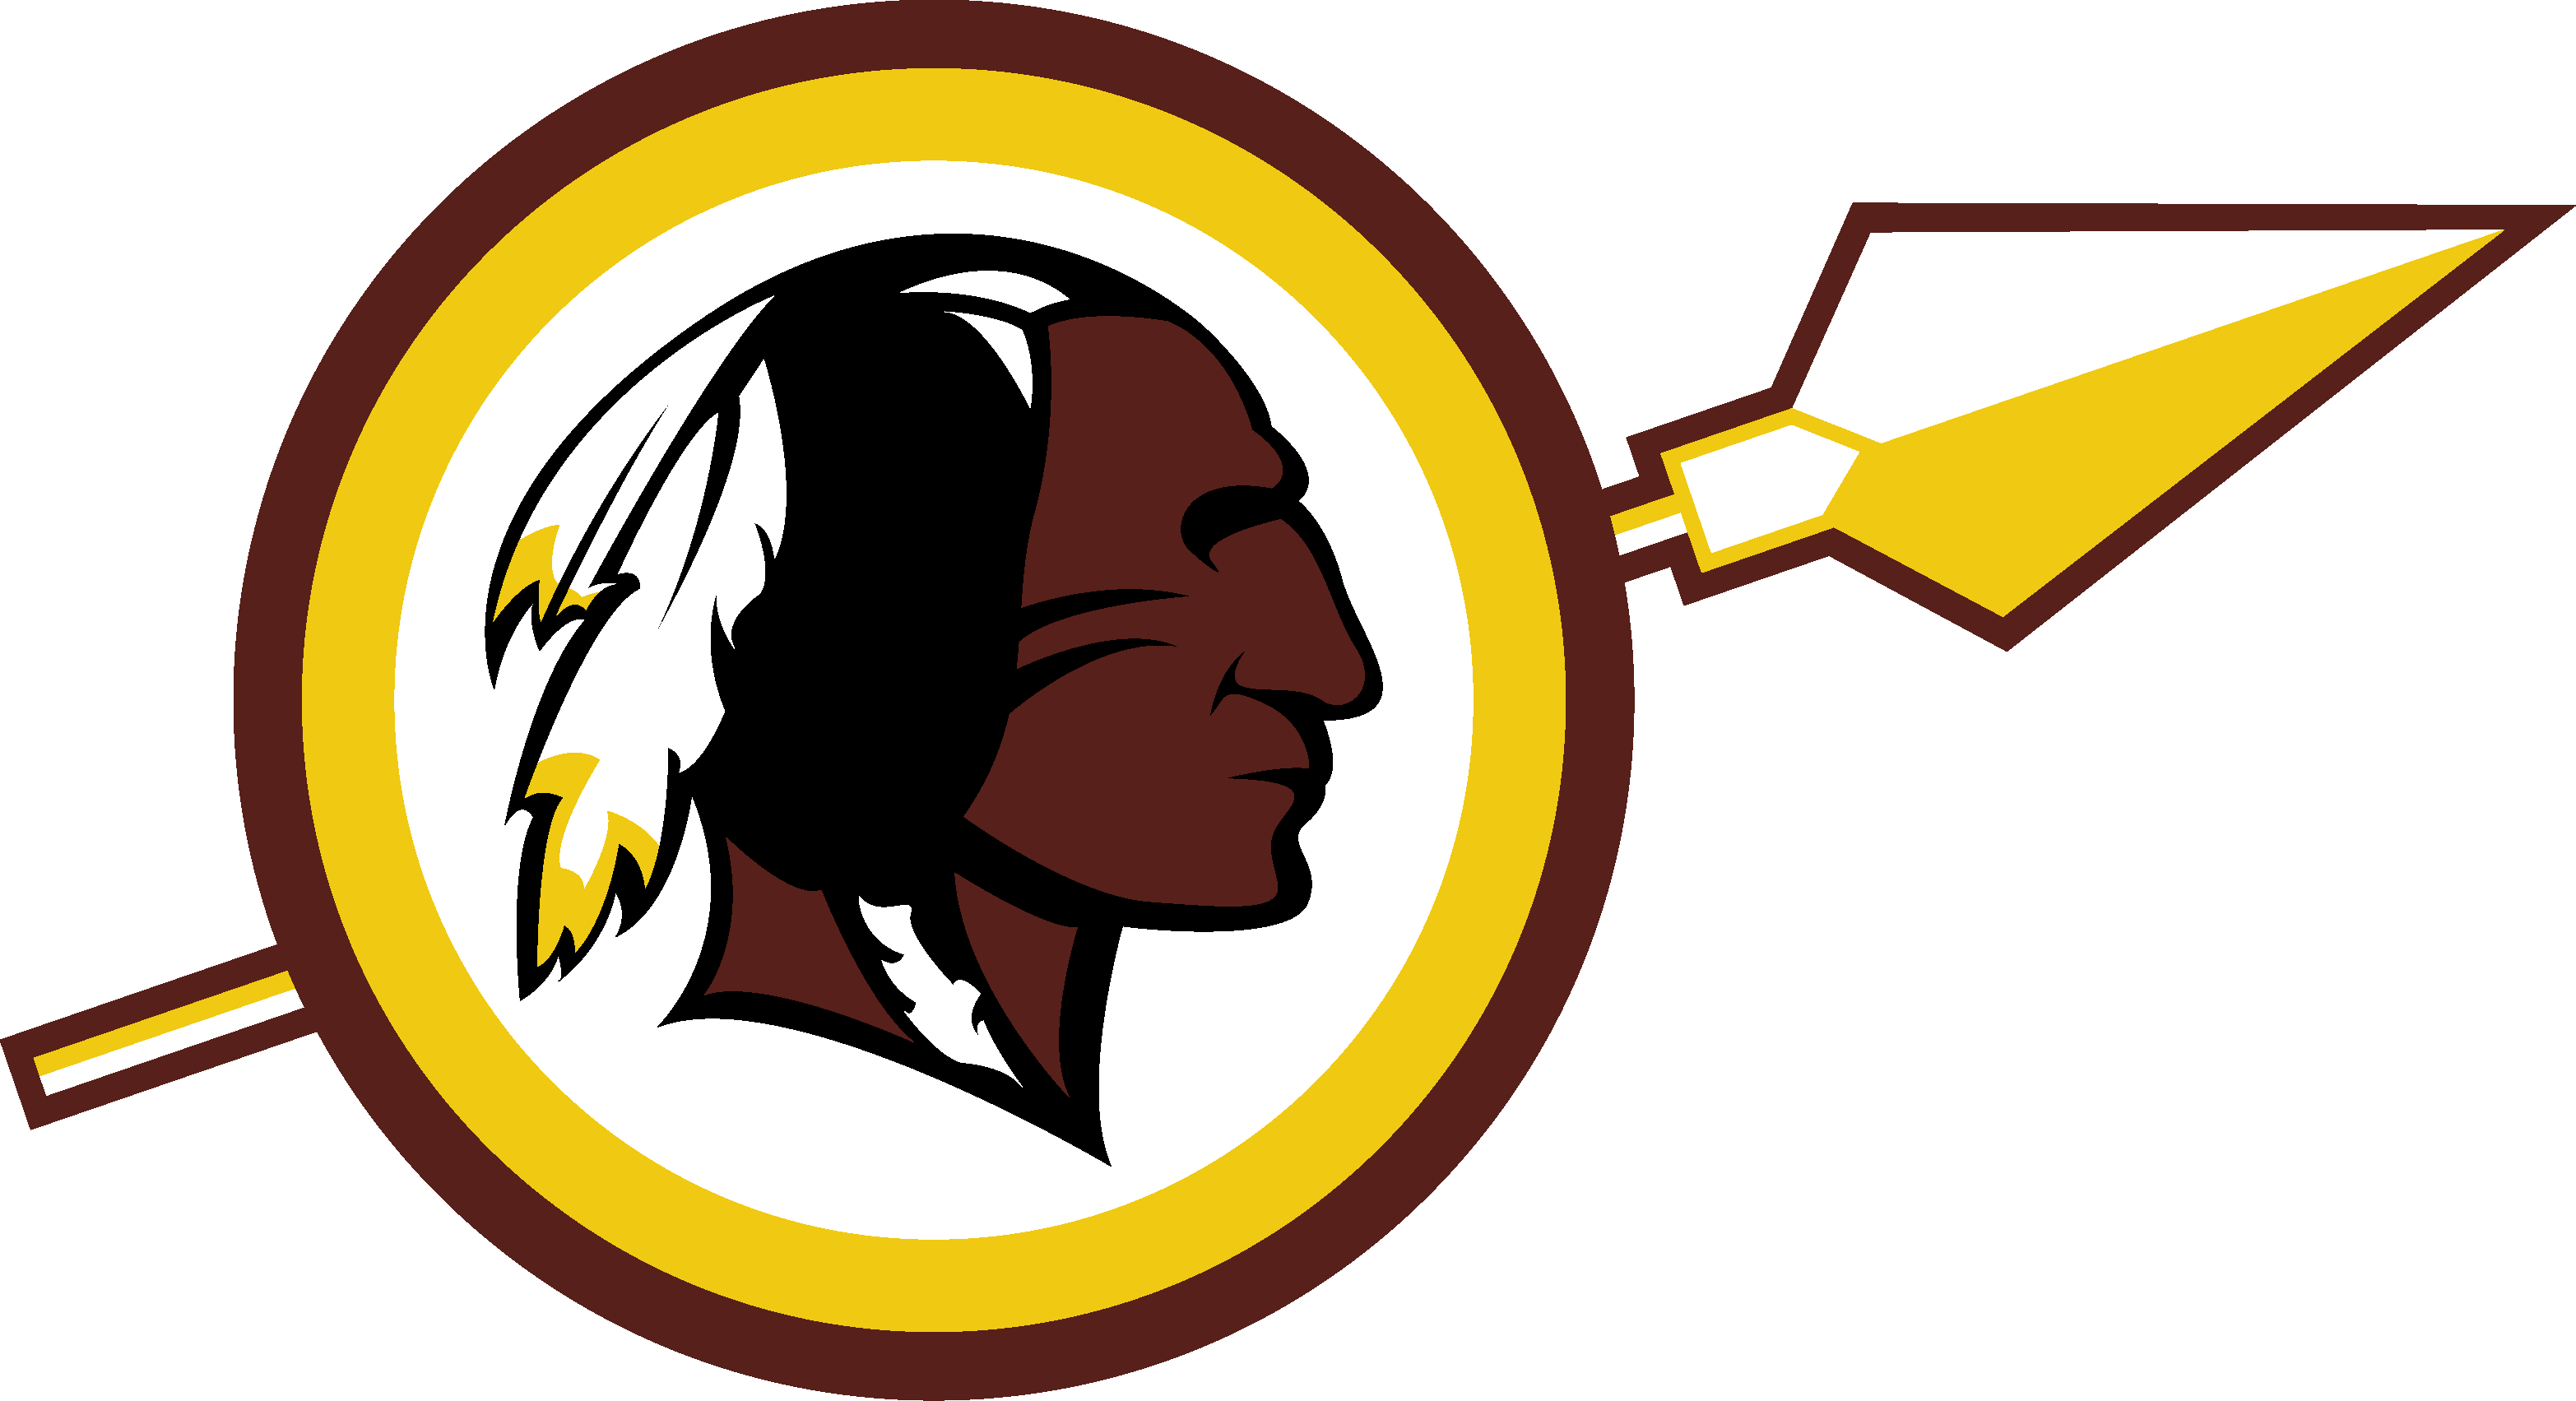 Redskins New Logo - New Washington Redskins logo - Concepts - Chris Creamer's Sports ...